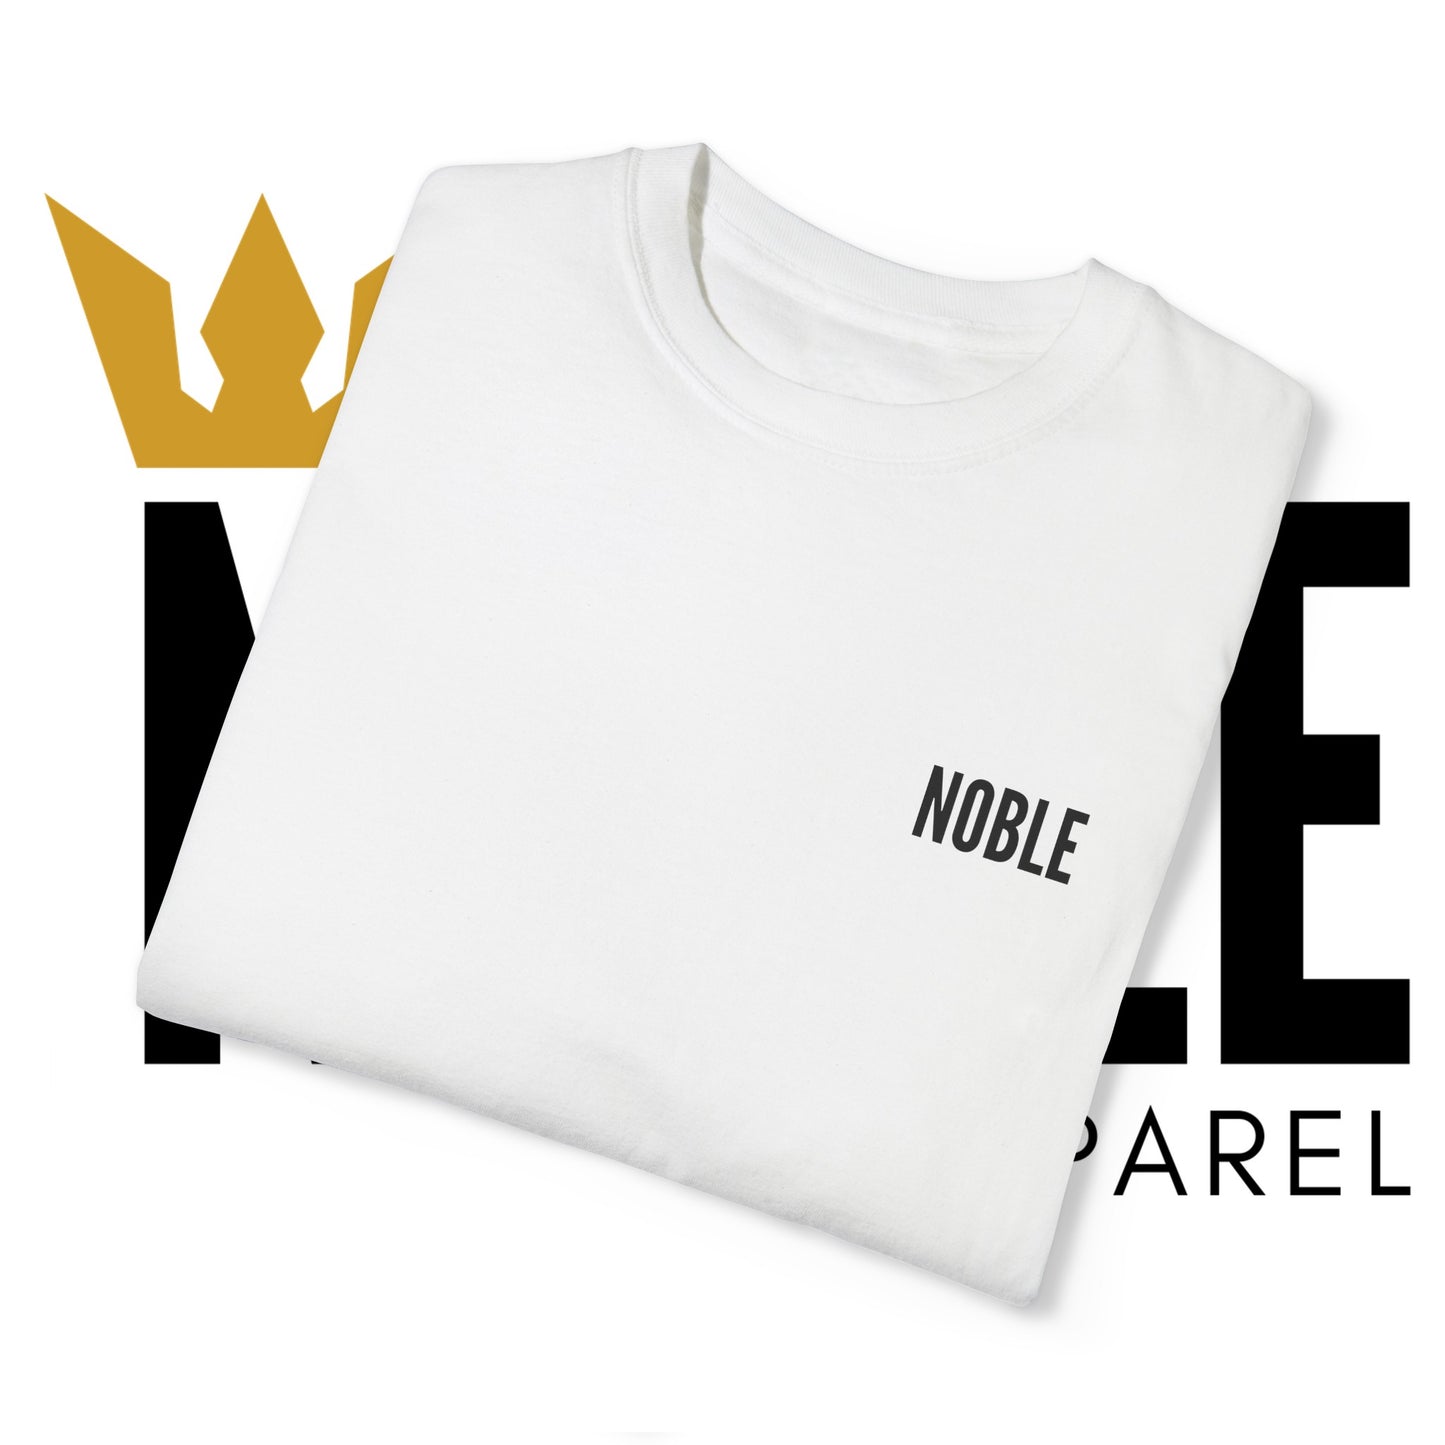 Noble Apparel T-shirt